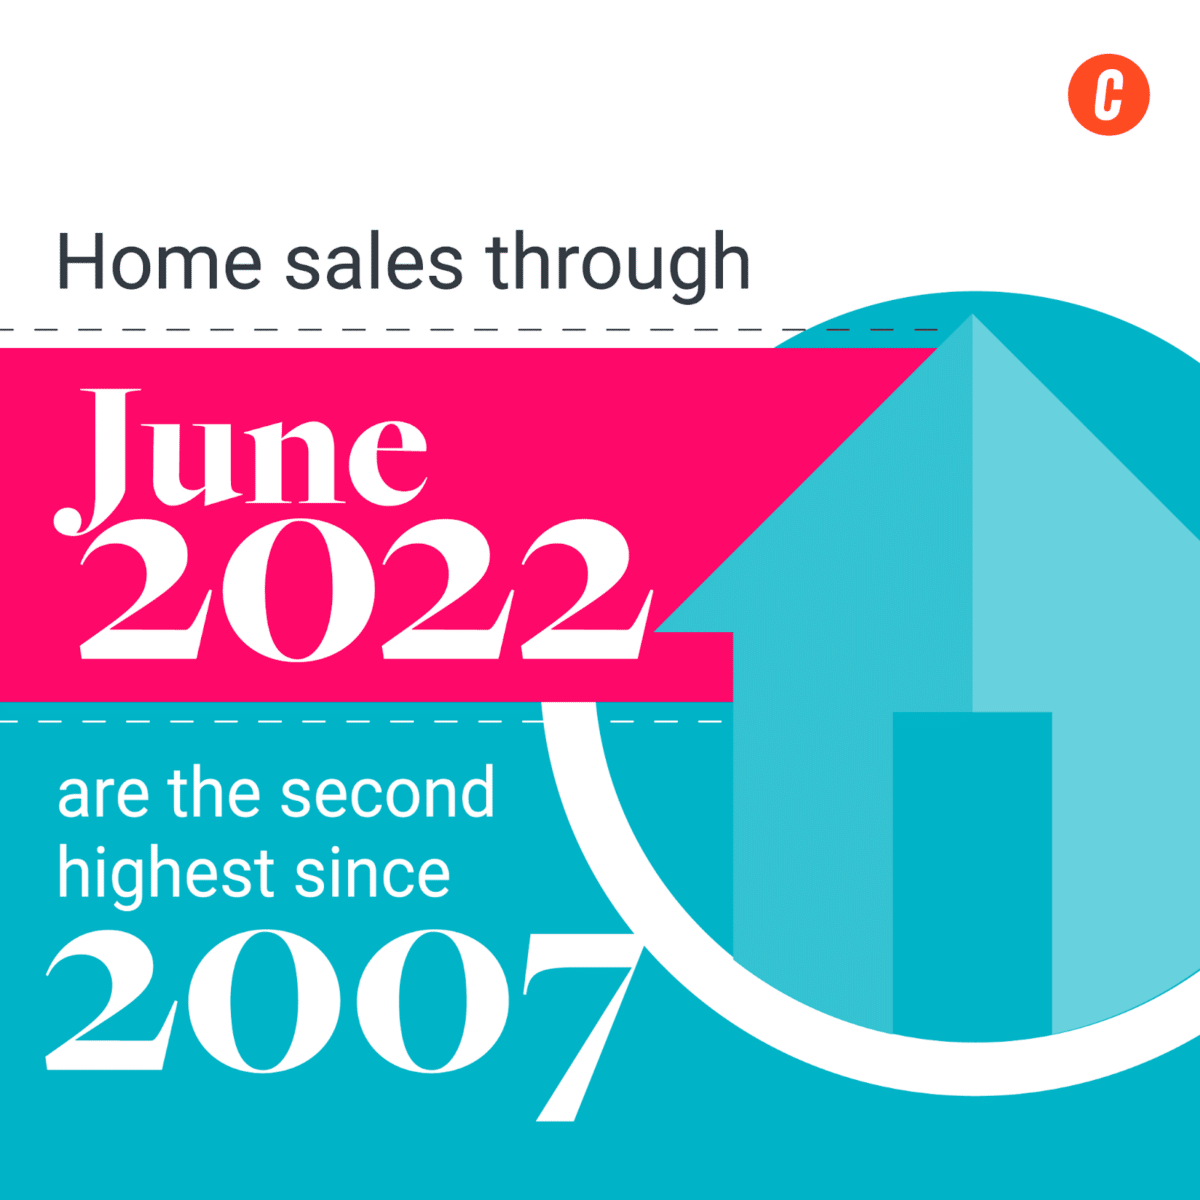 home sales through june 2022